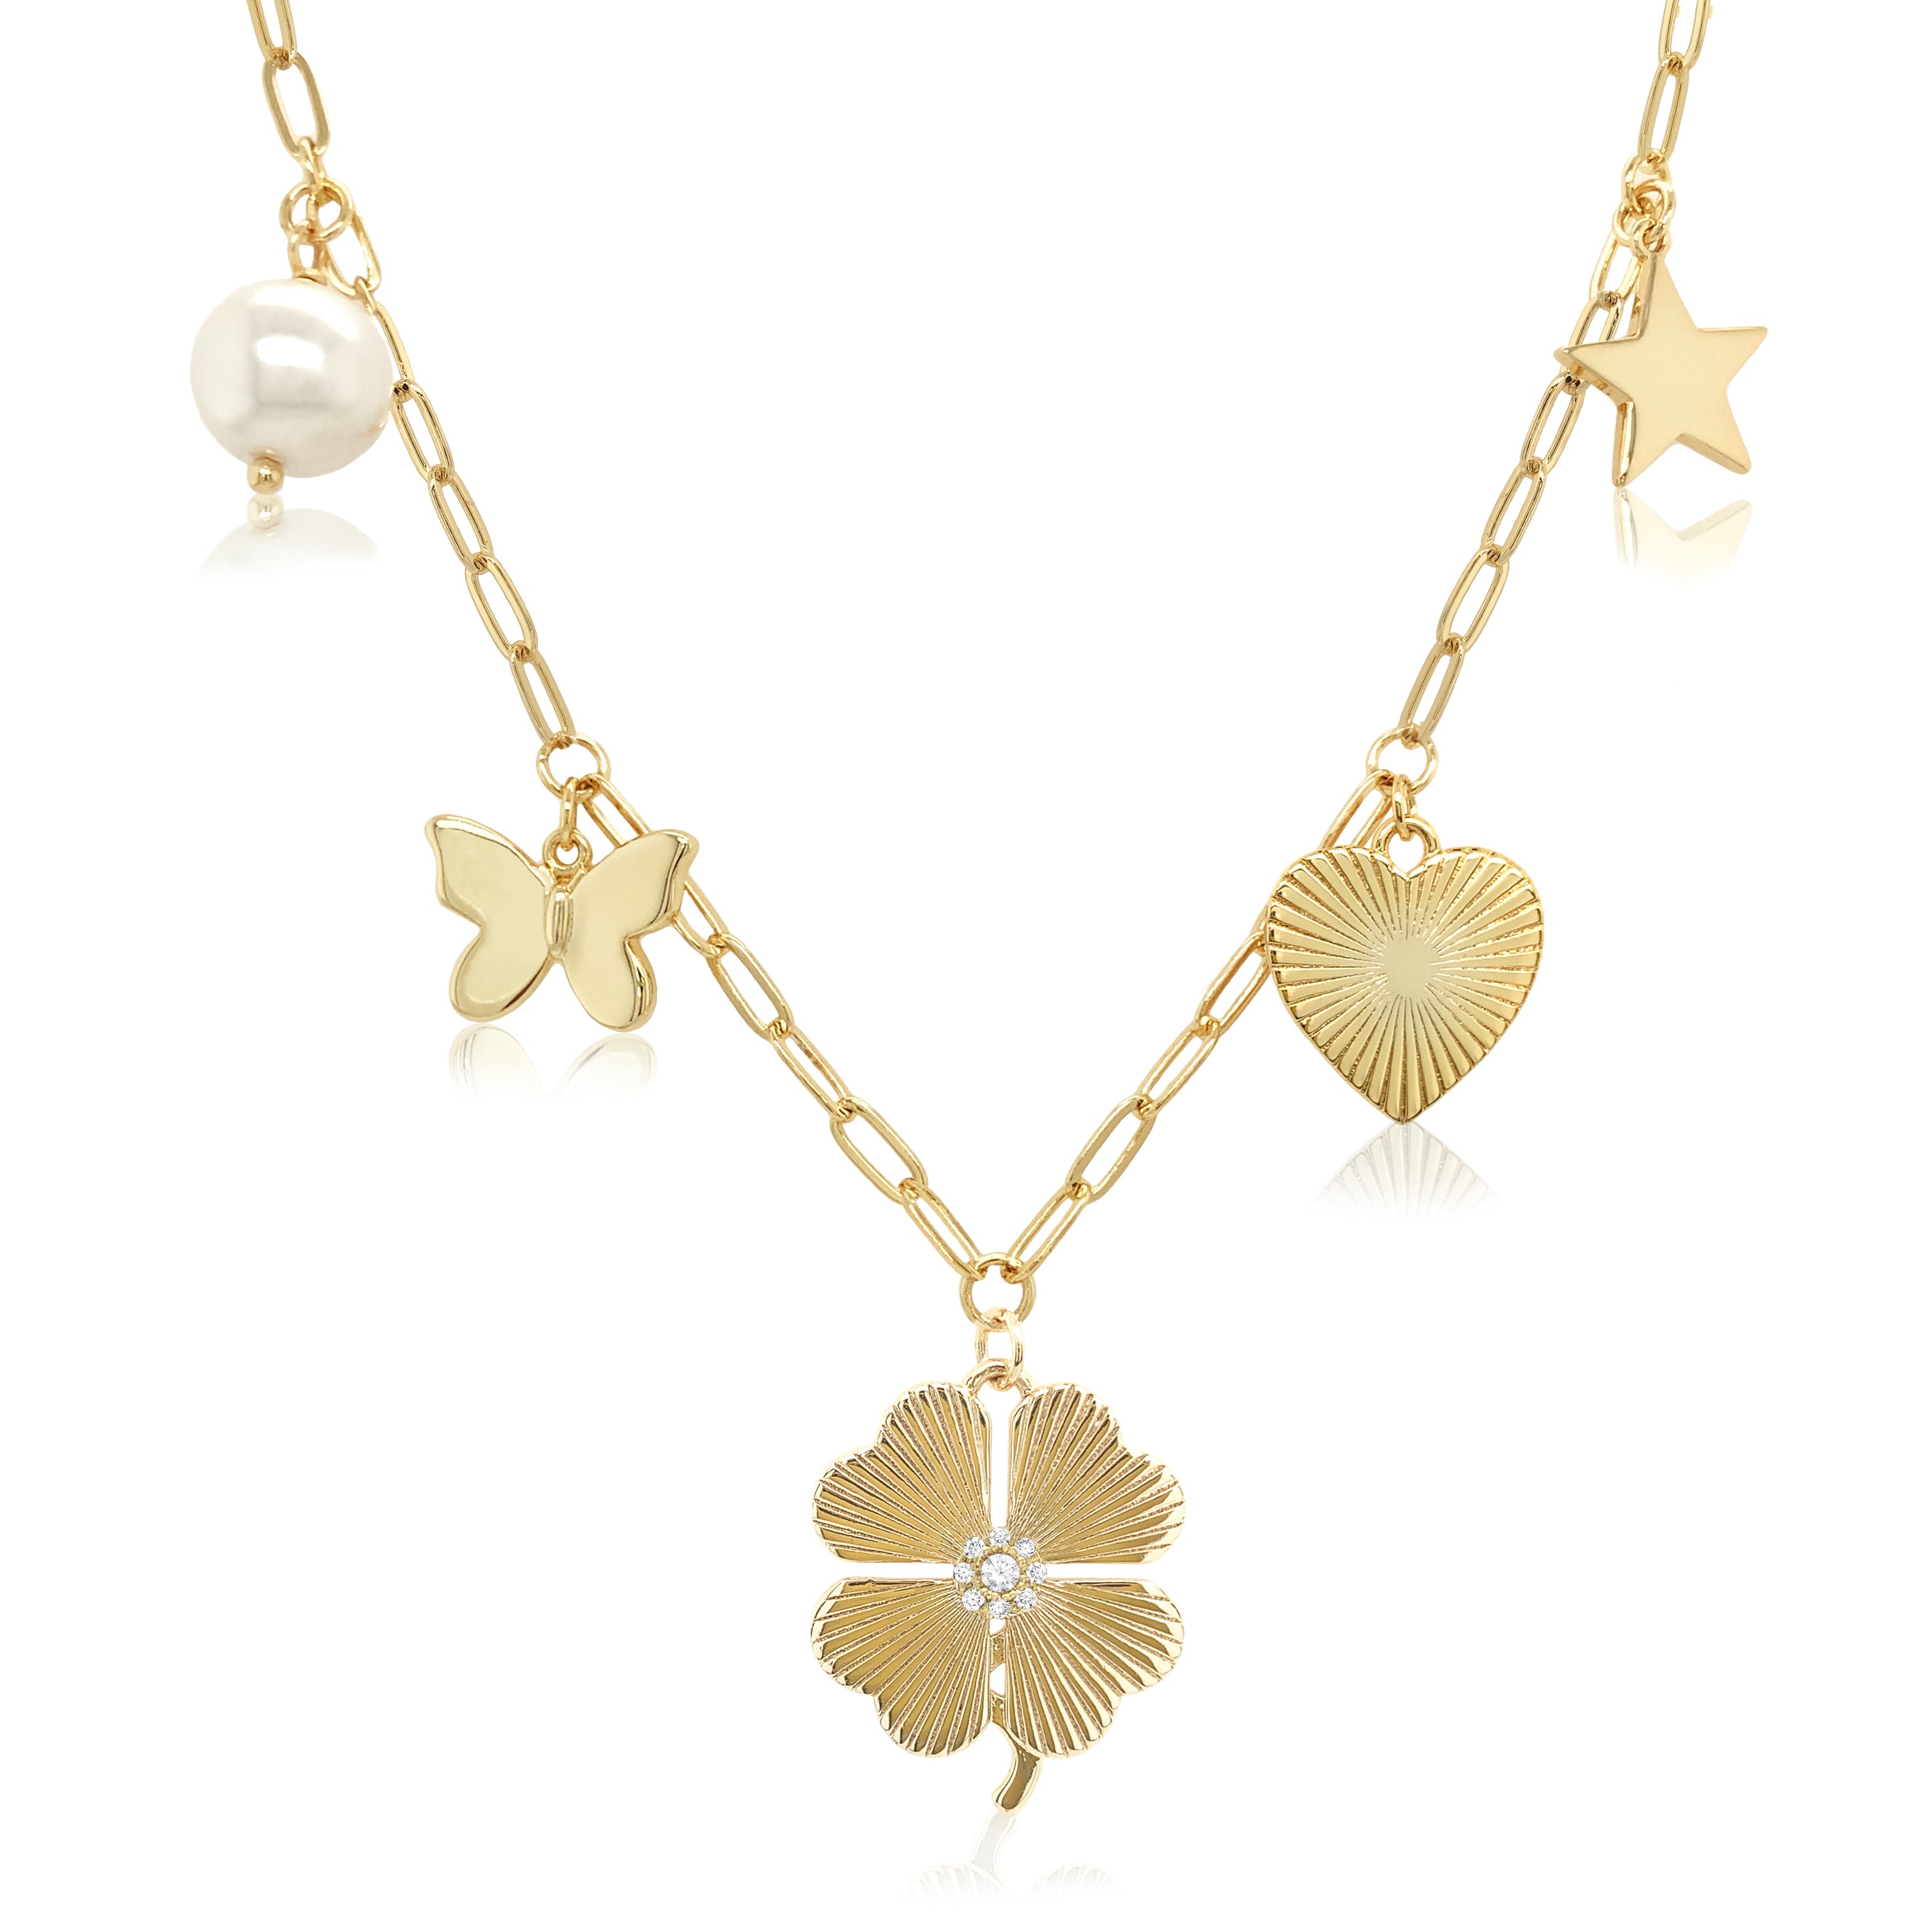 Unique Four Leaf Clover Matching Heart Necklaces For Couples In Titanium